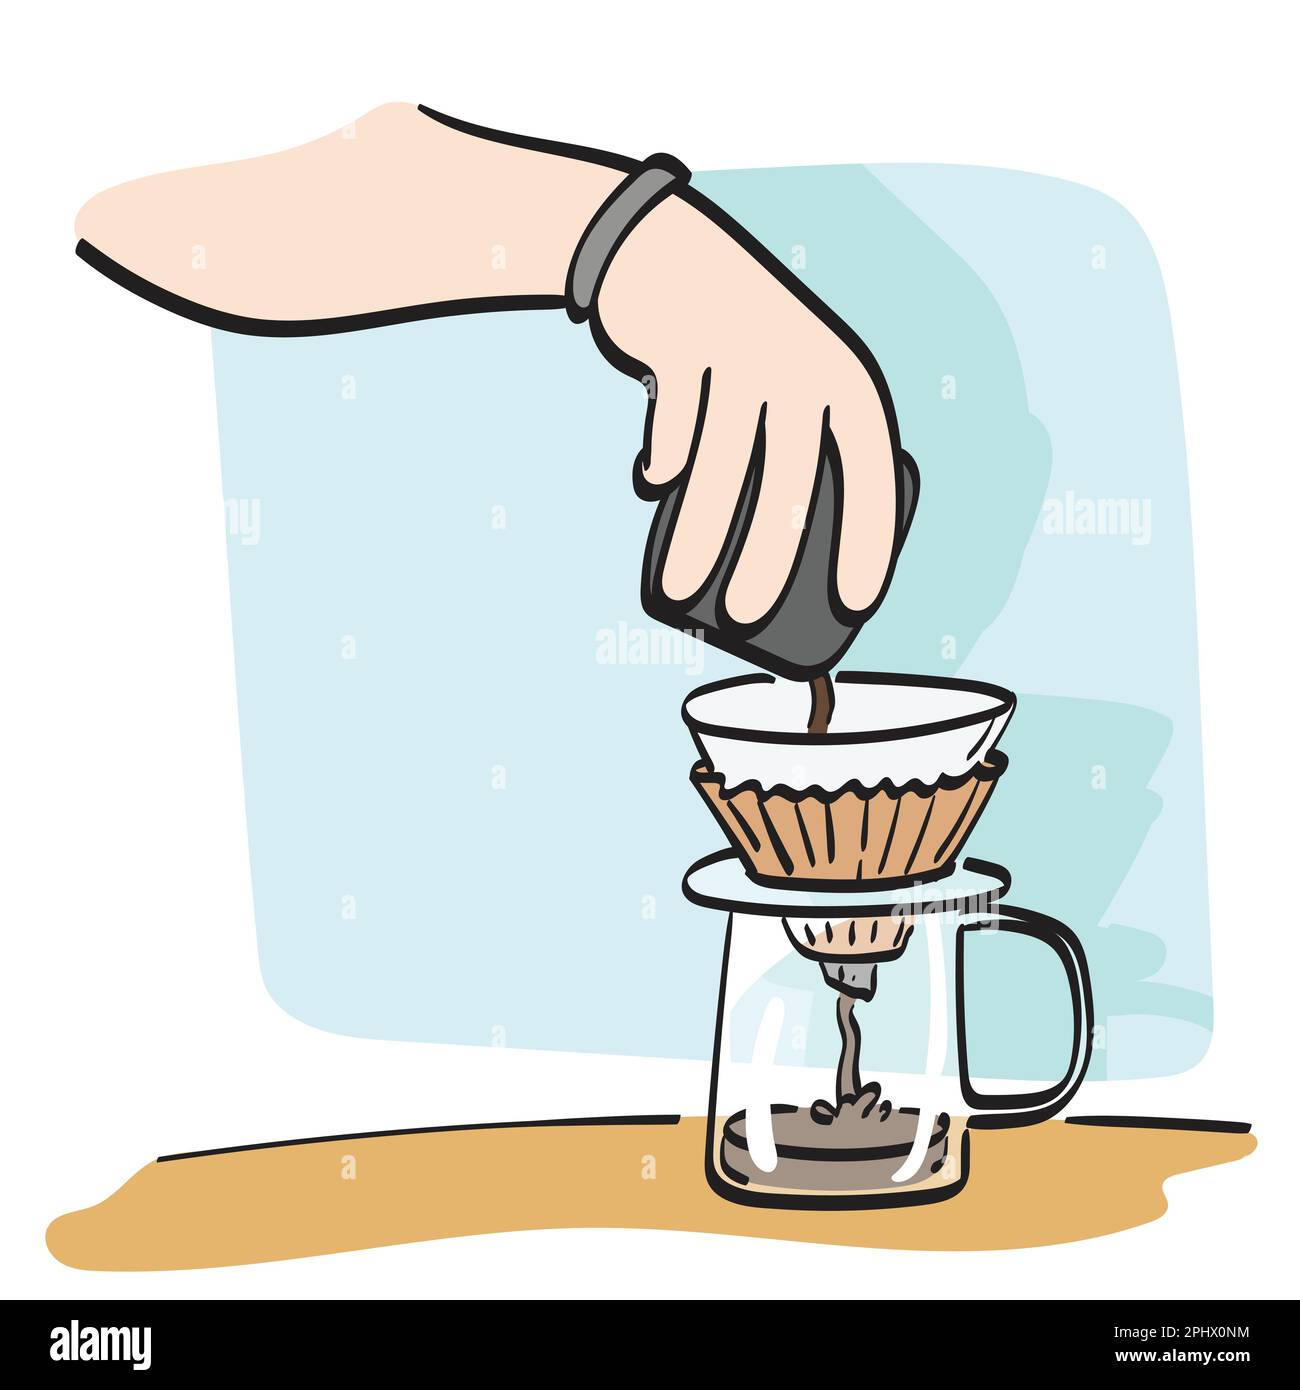 Composición plana de barista con accesorios para hacer café ilustración  vectorial plana